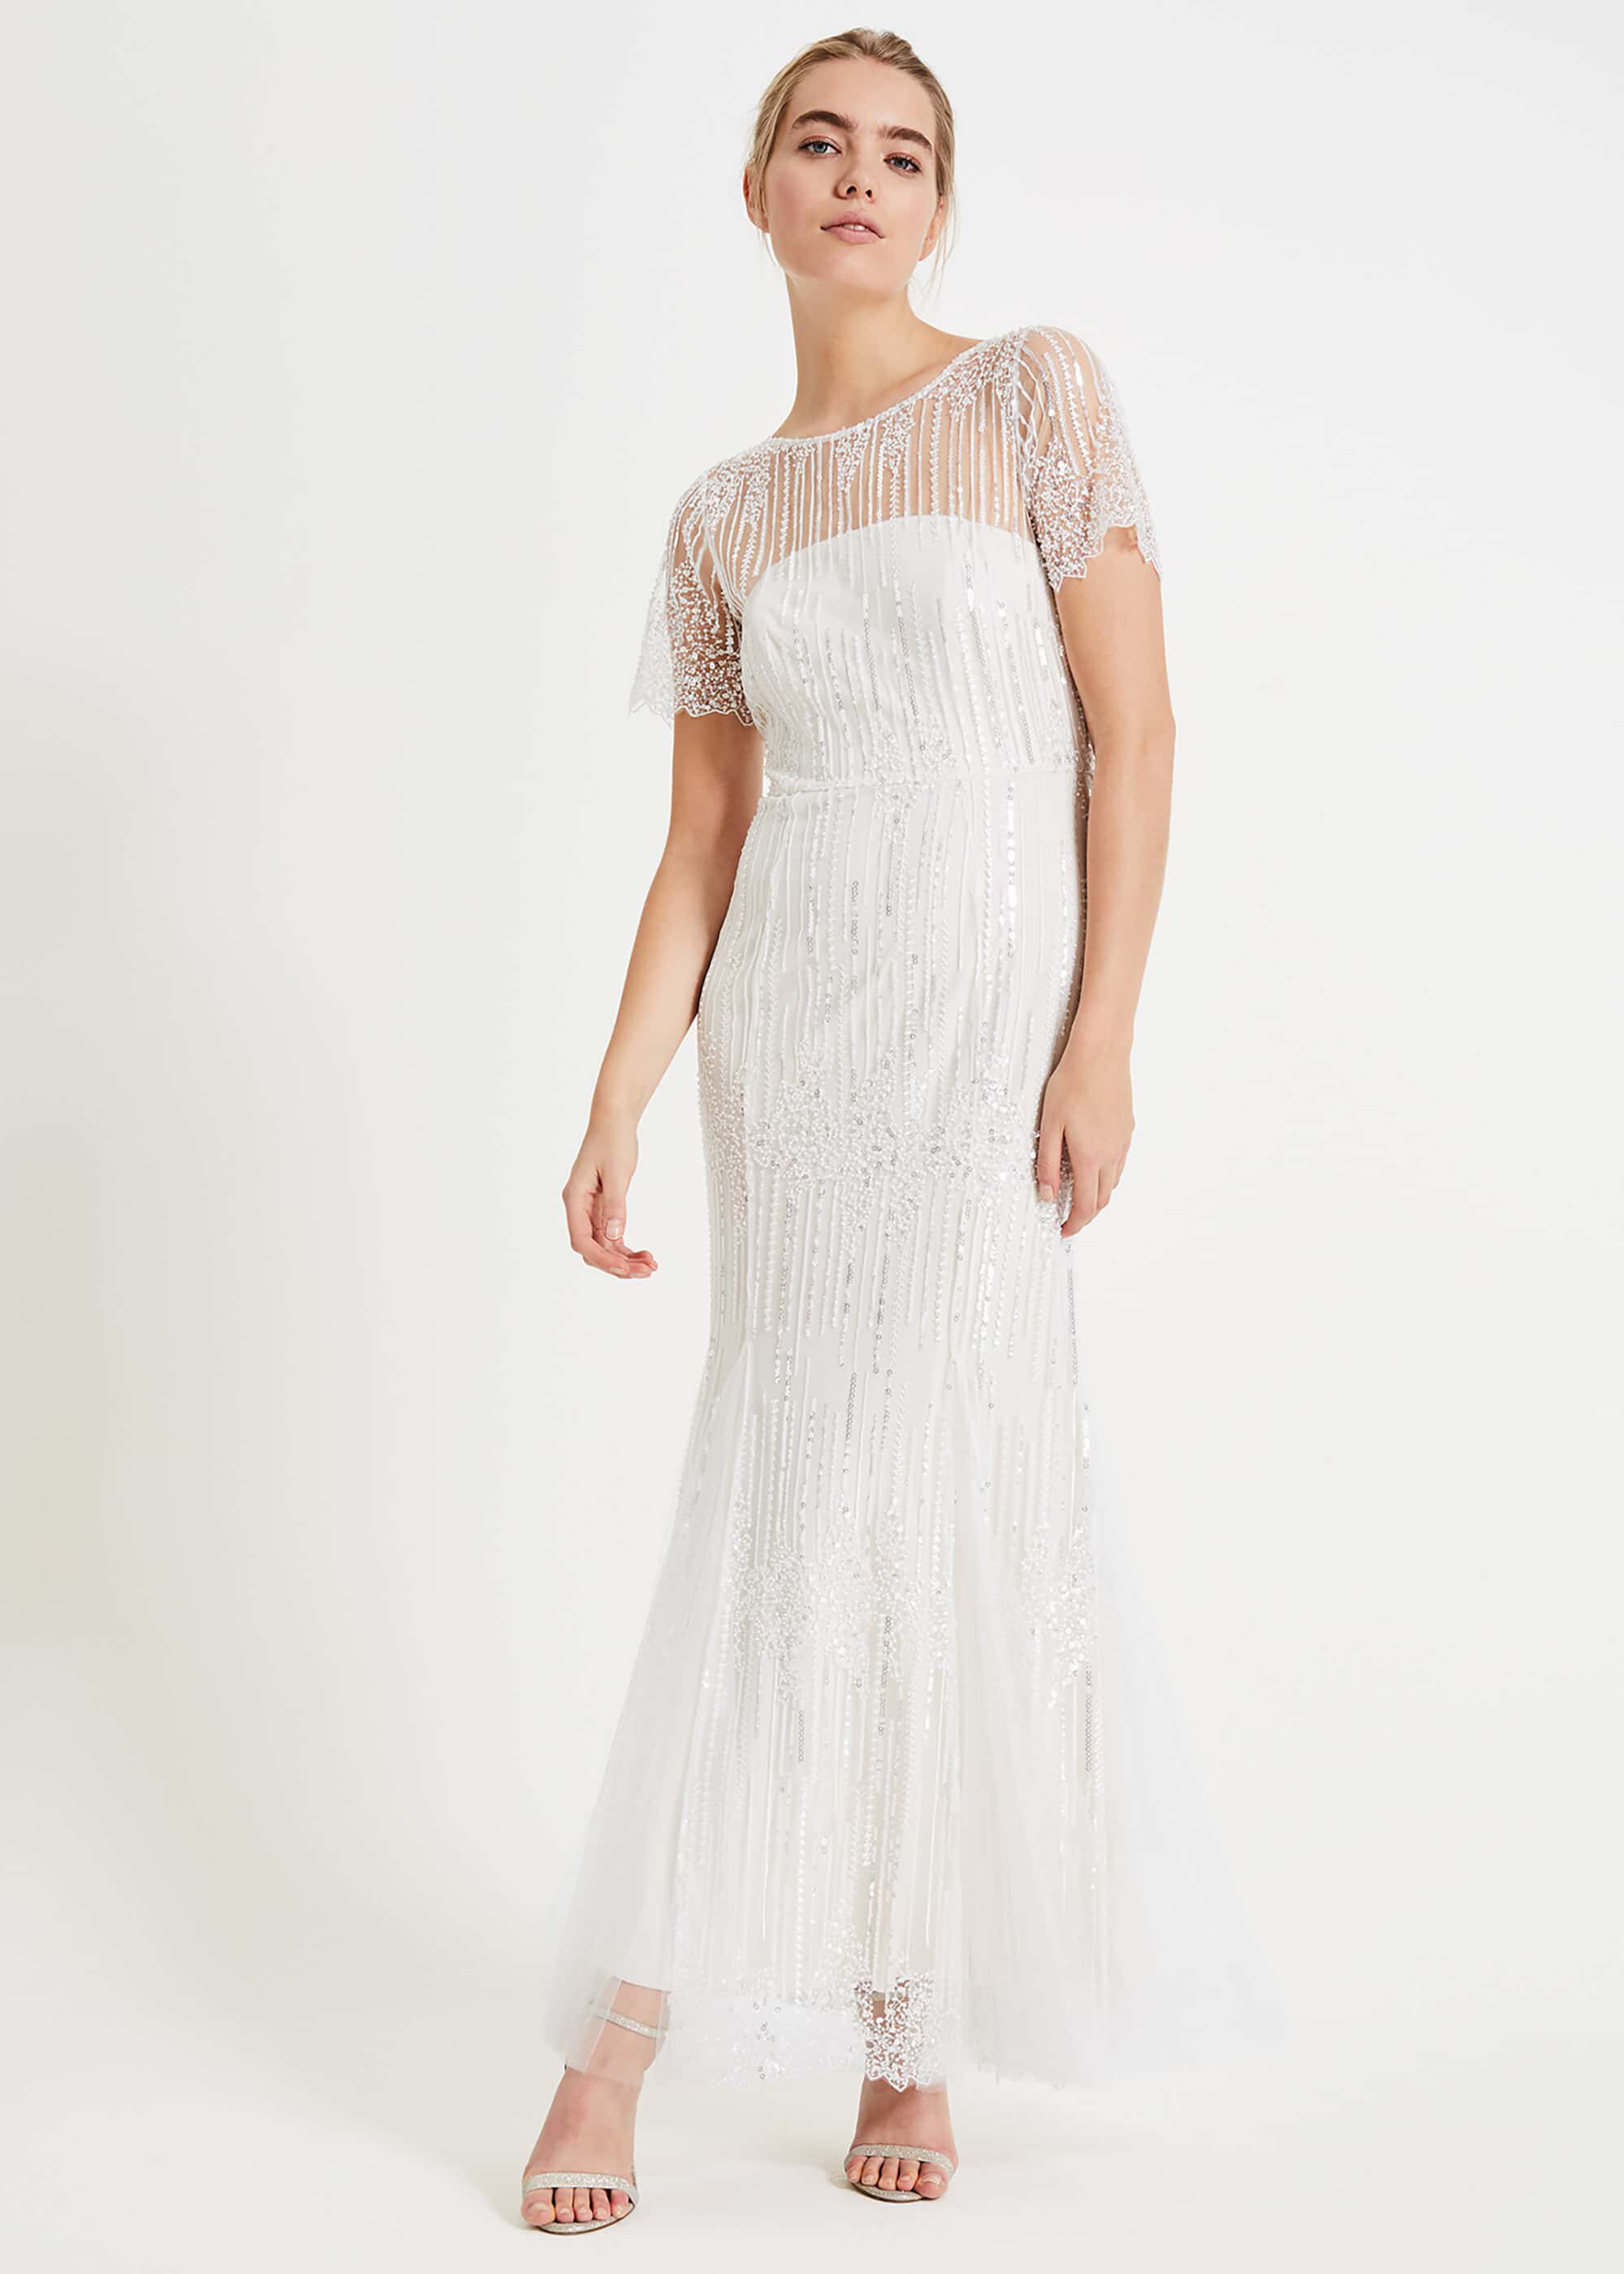 3 quarter sleeve lace wedding dress